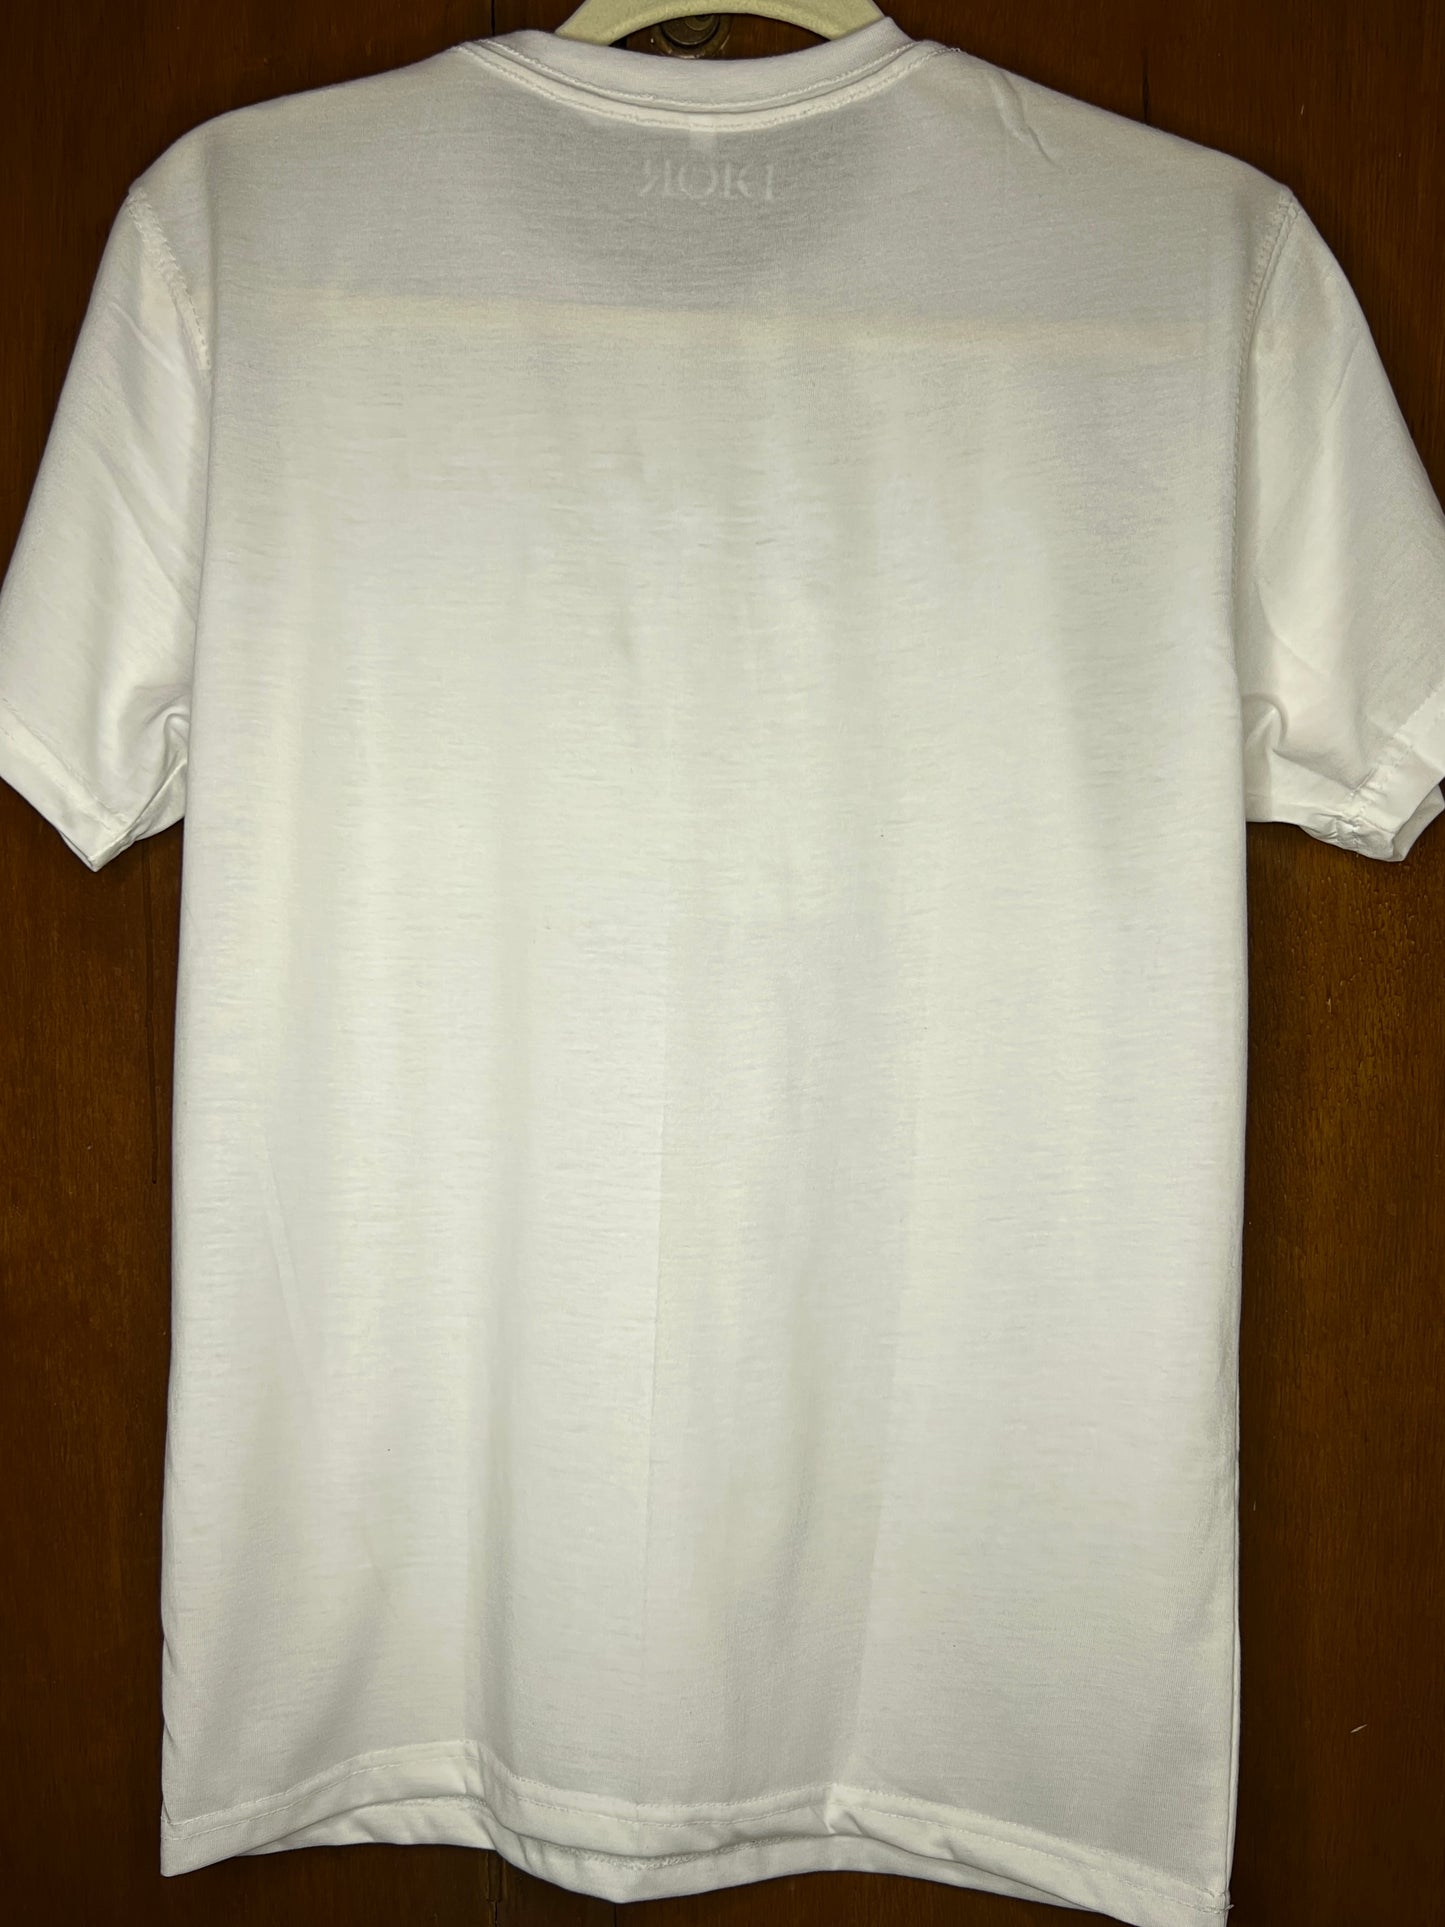 Dior Front Logo White T-Shirt